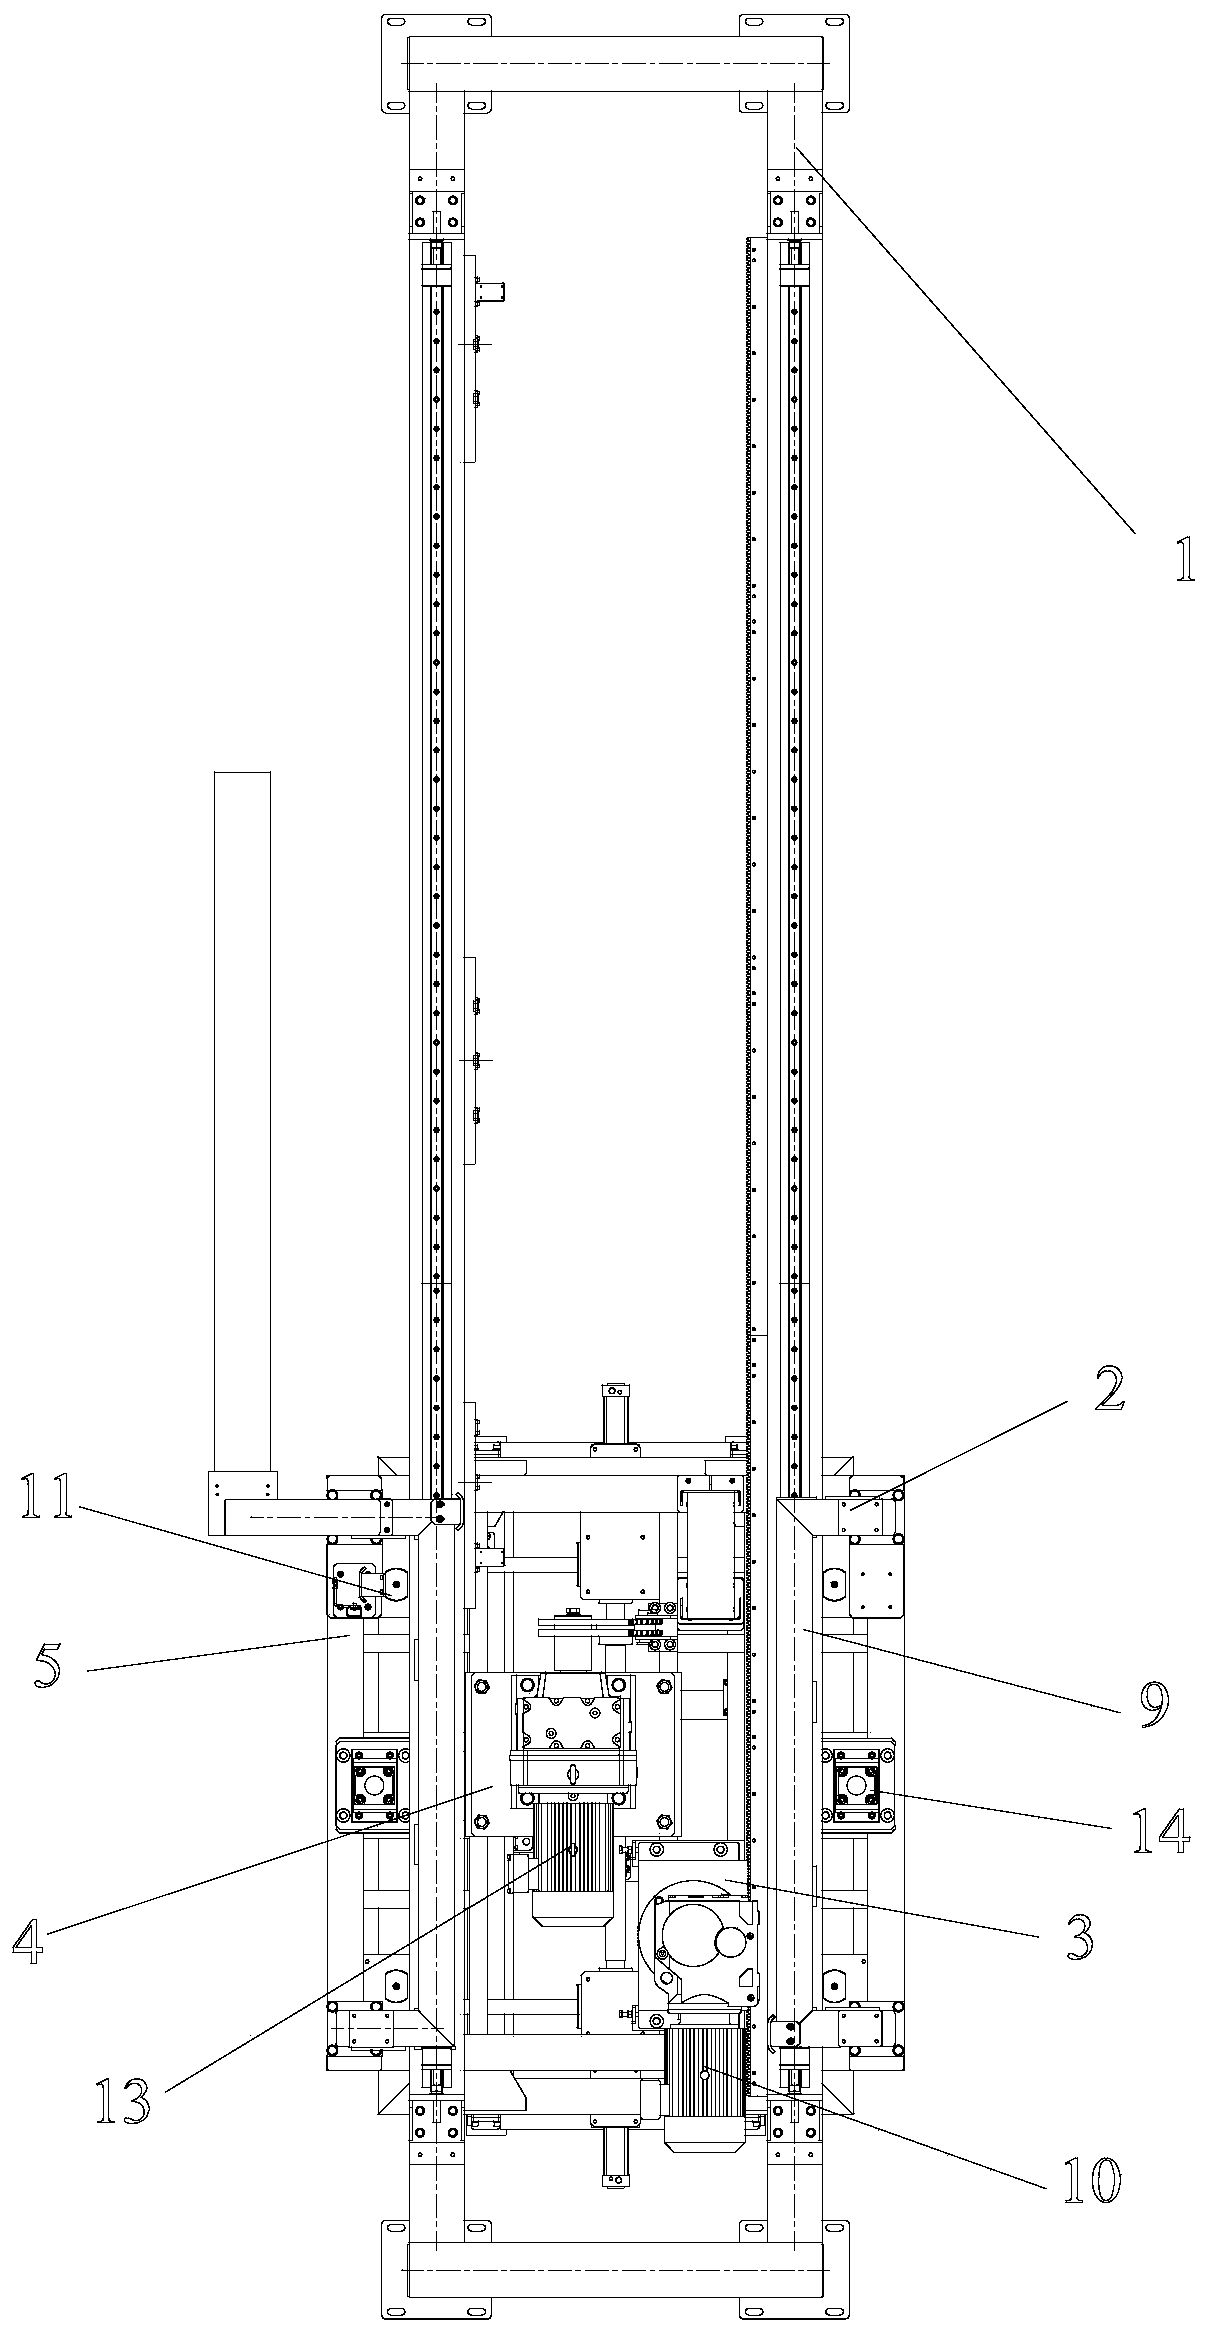 Reverse hanging type pallet hoisting and transferring machine